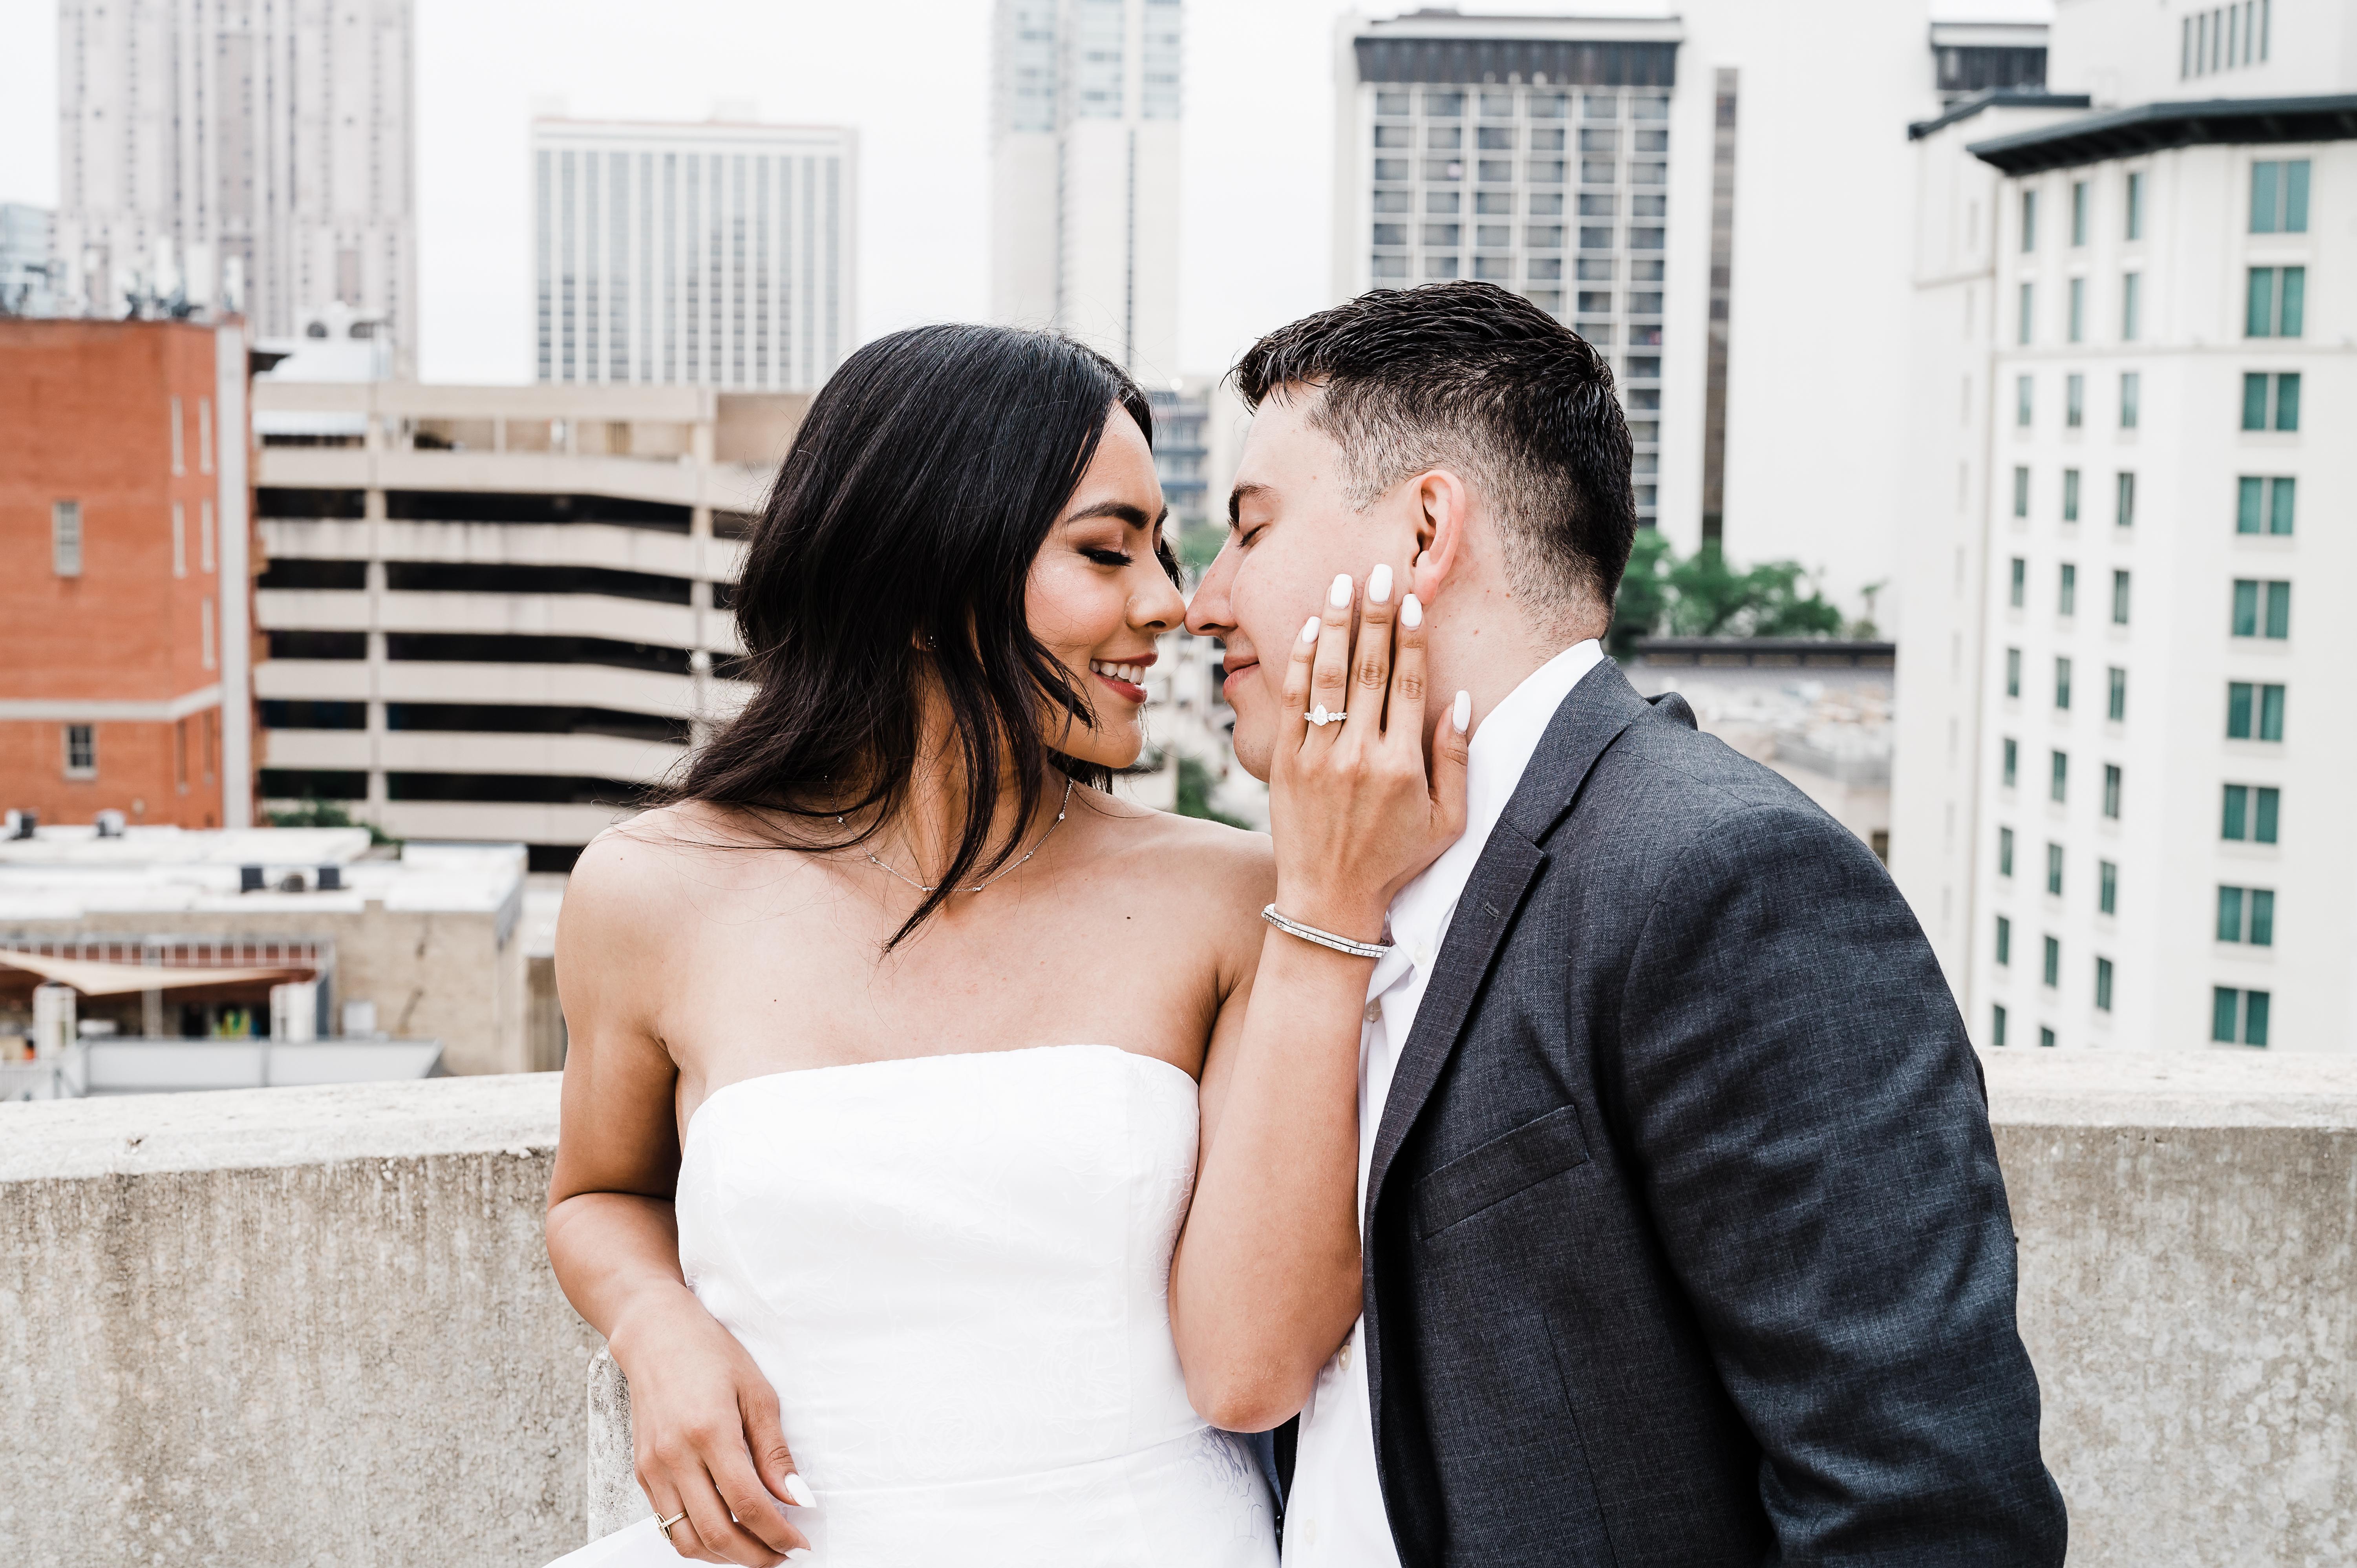 The Wedding Website of Christina Lozano and Hector Alvarez